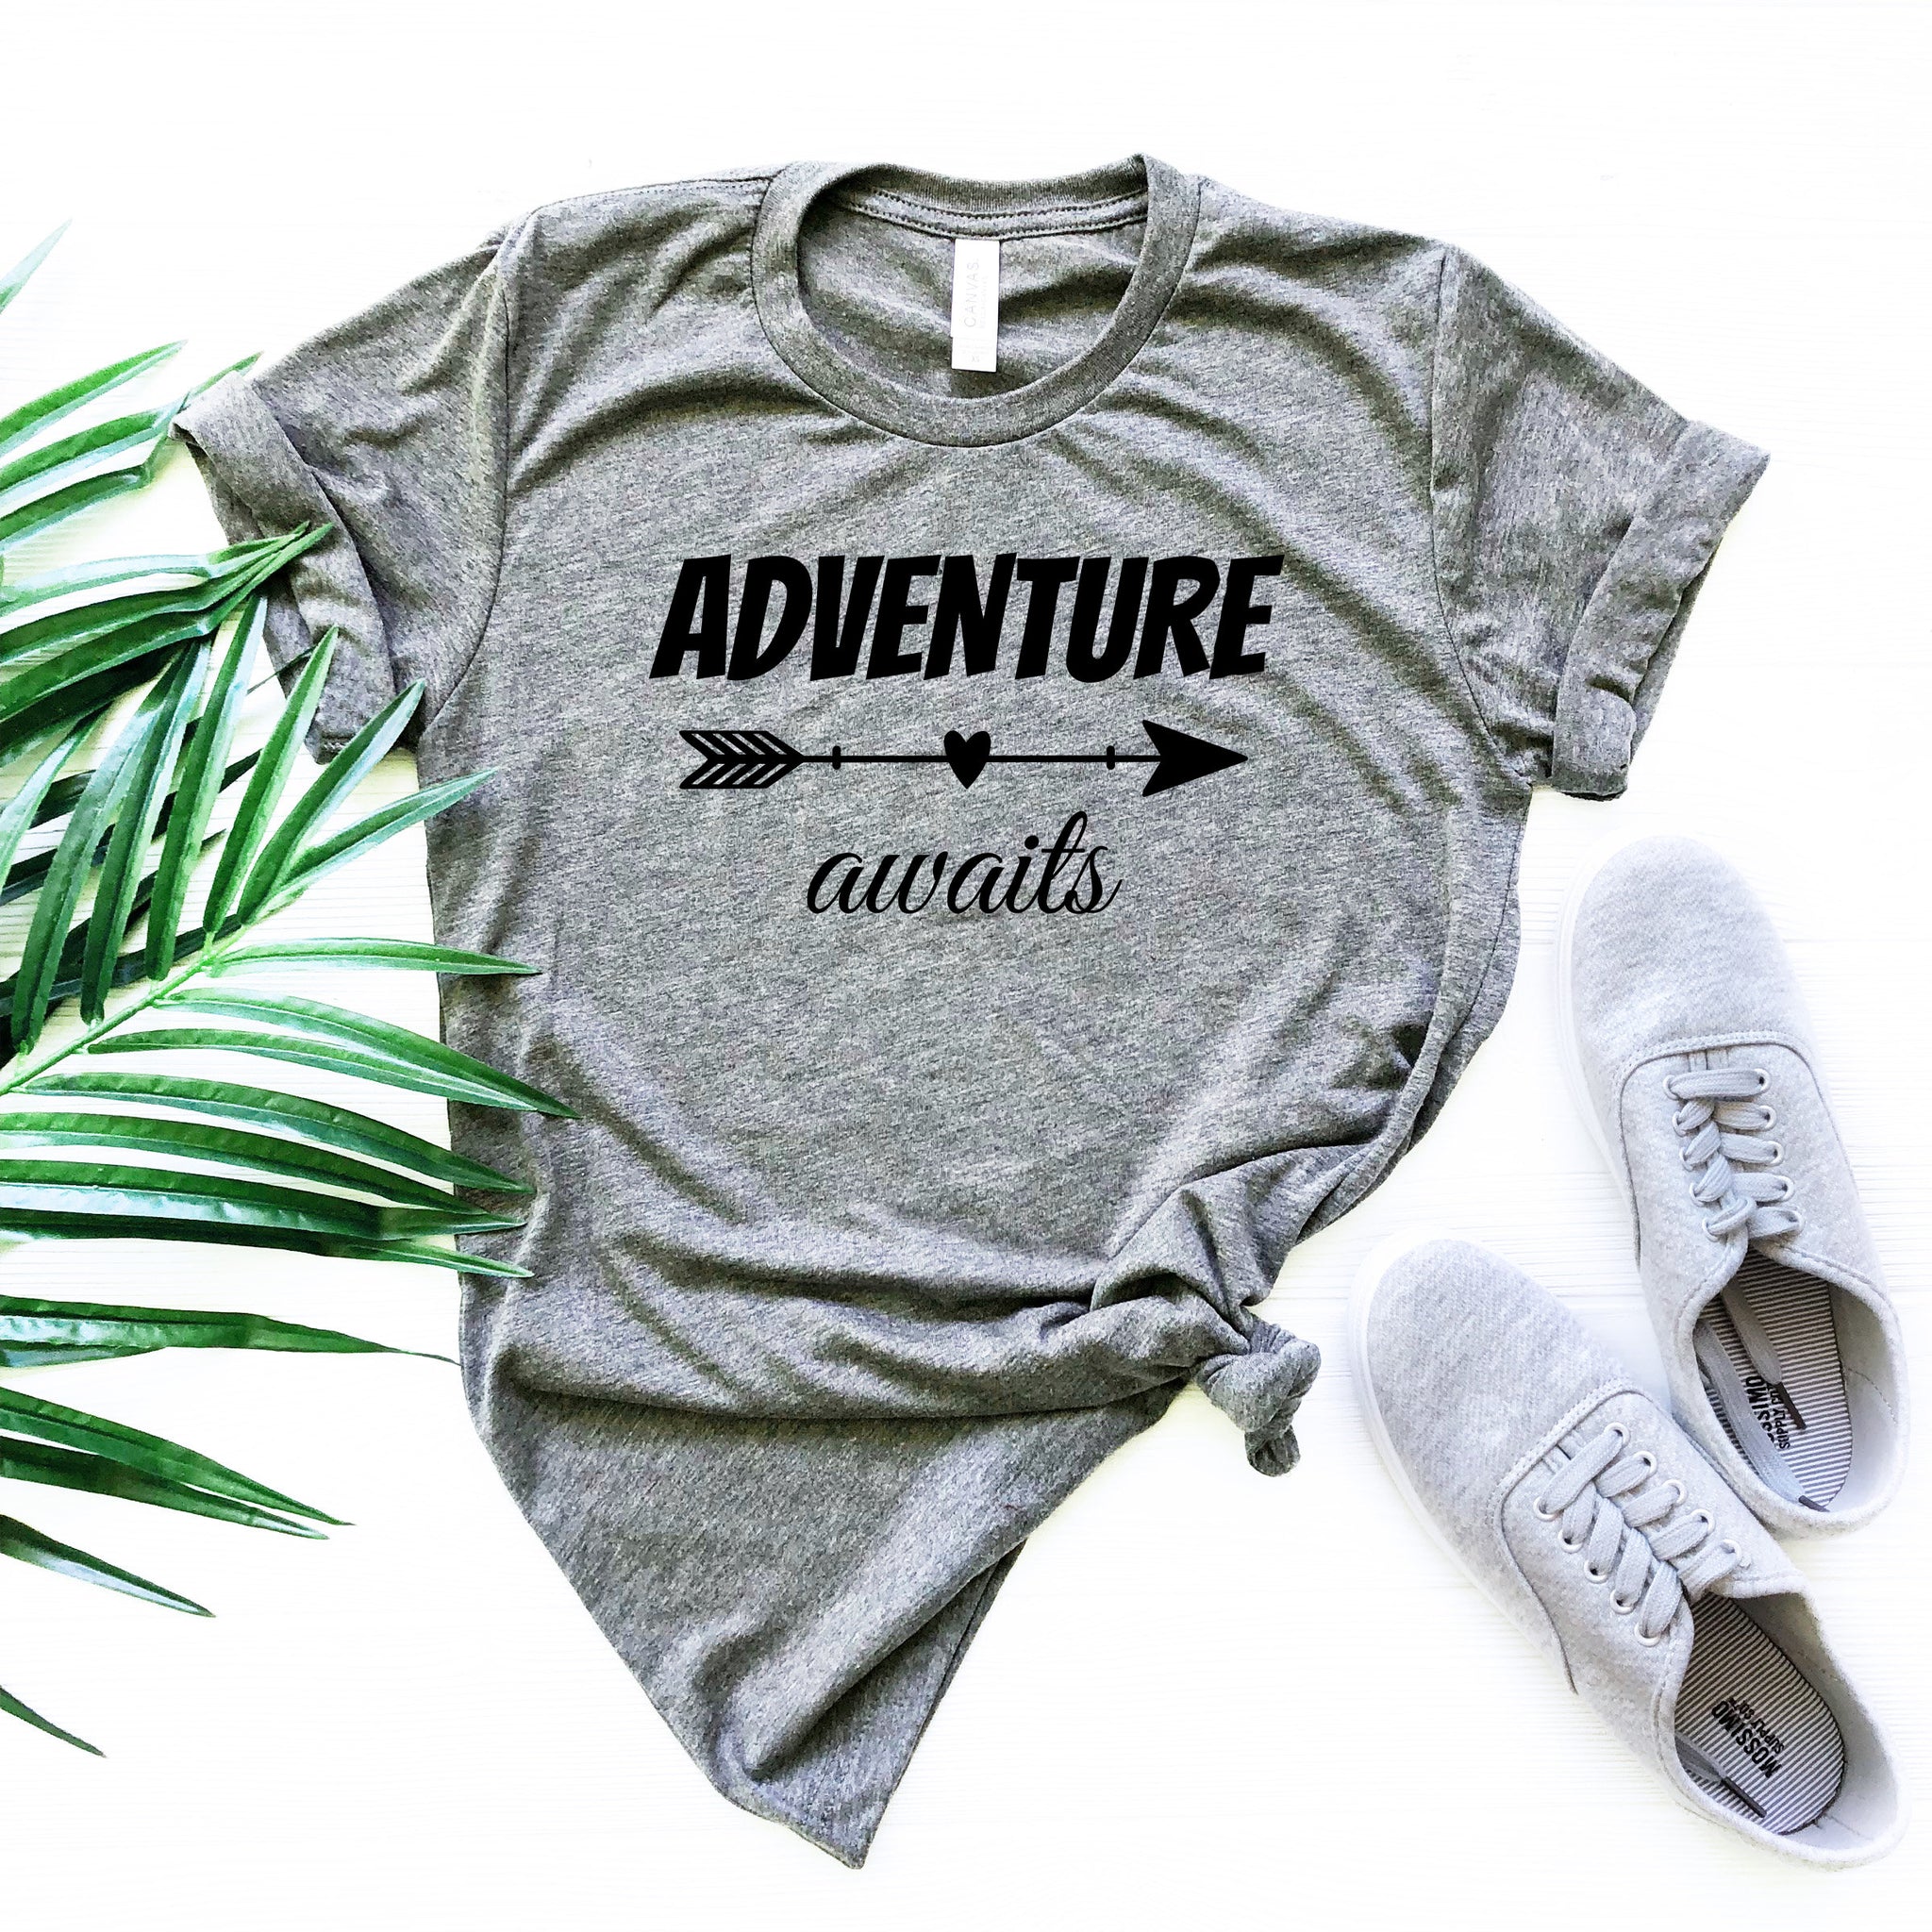 Mountain Shirt, Vacation Tshirt, Camping Shirt, Adventure Shirt, Climbing Shirt, Hiking Shirt, Travel Shirt, Camper Shirt, Outdoor Shirt,m80 - Fastdeliverytees.com